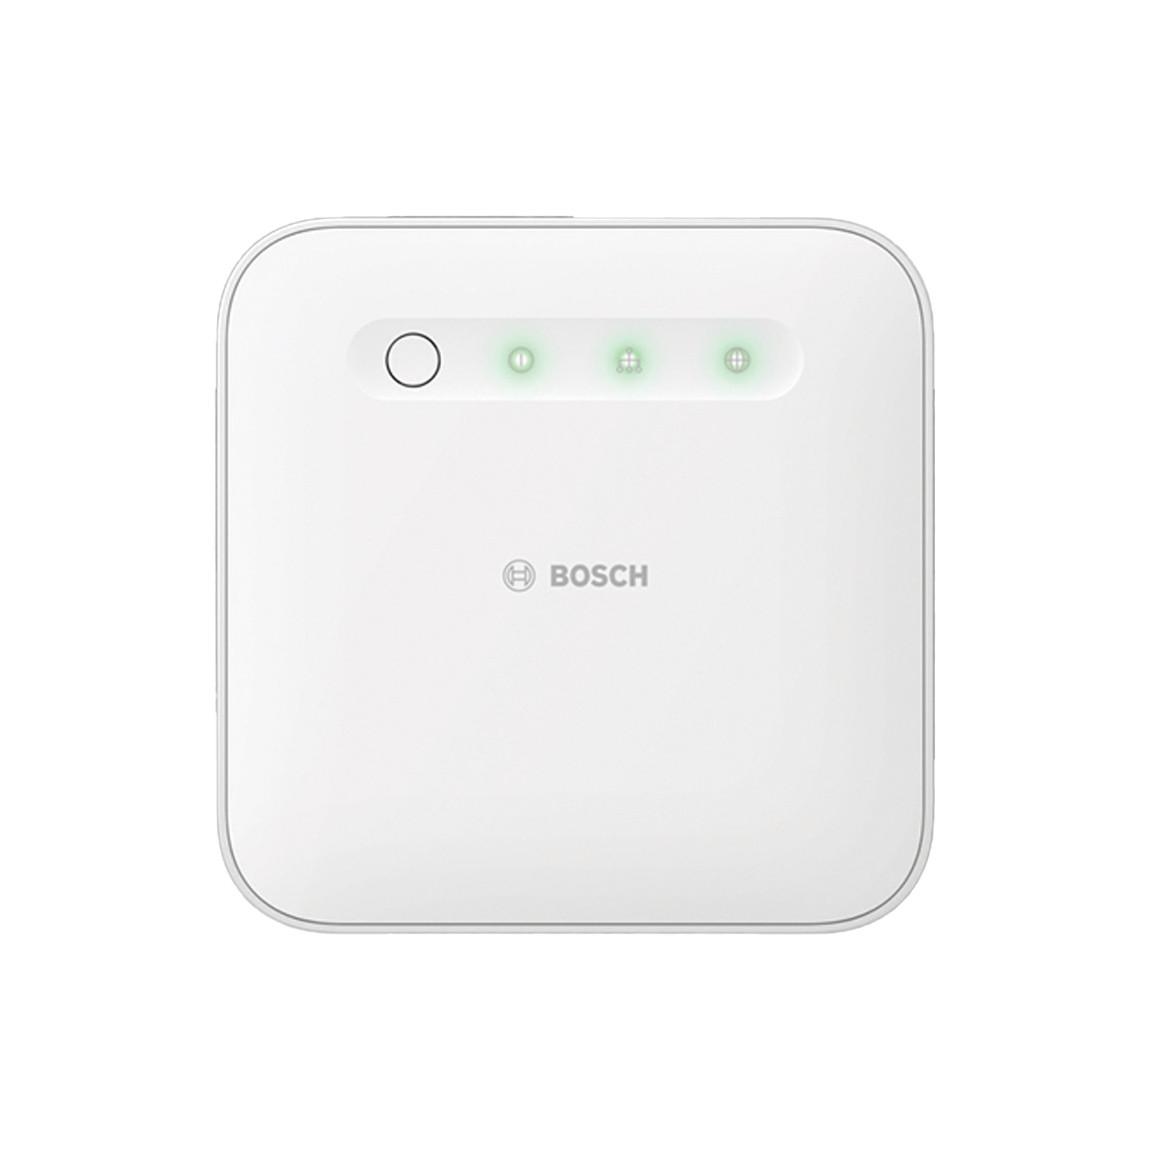 Bosch Smart Home - Starter Set Heizung II mit 10 Thermostaten_Controller frontal